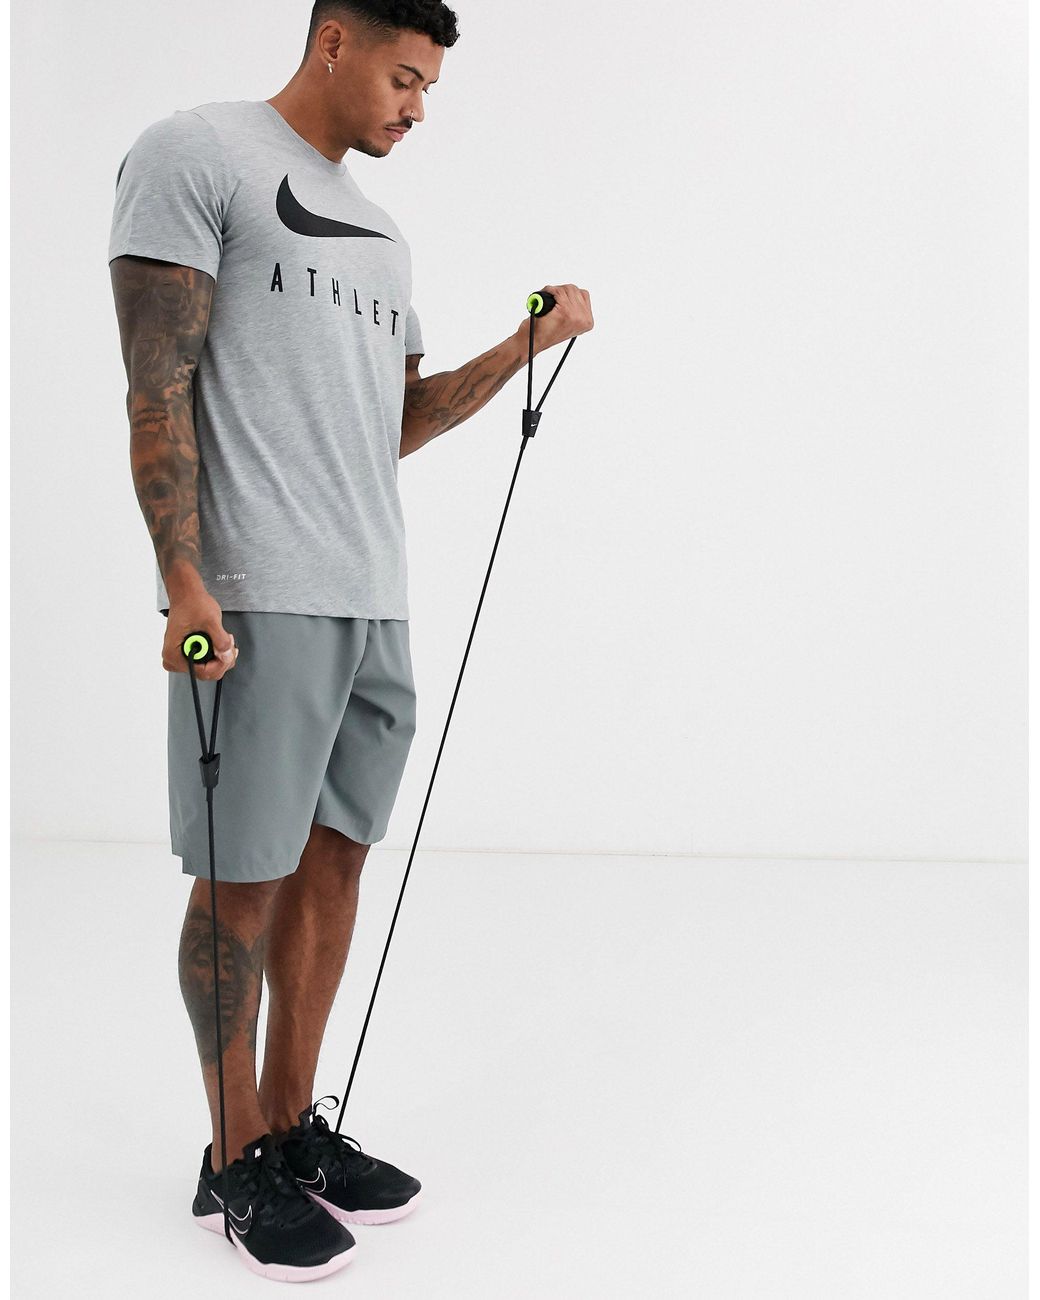 Nike Athlete T-shirt in Grey for Men Lyst